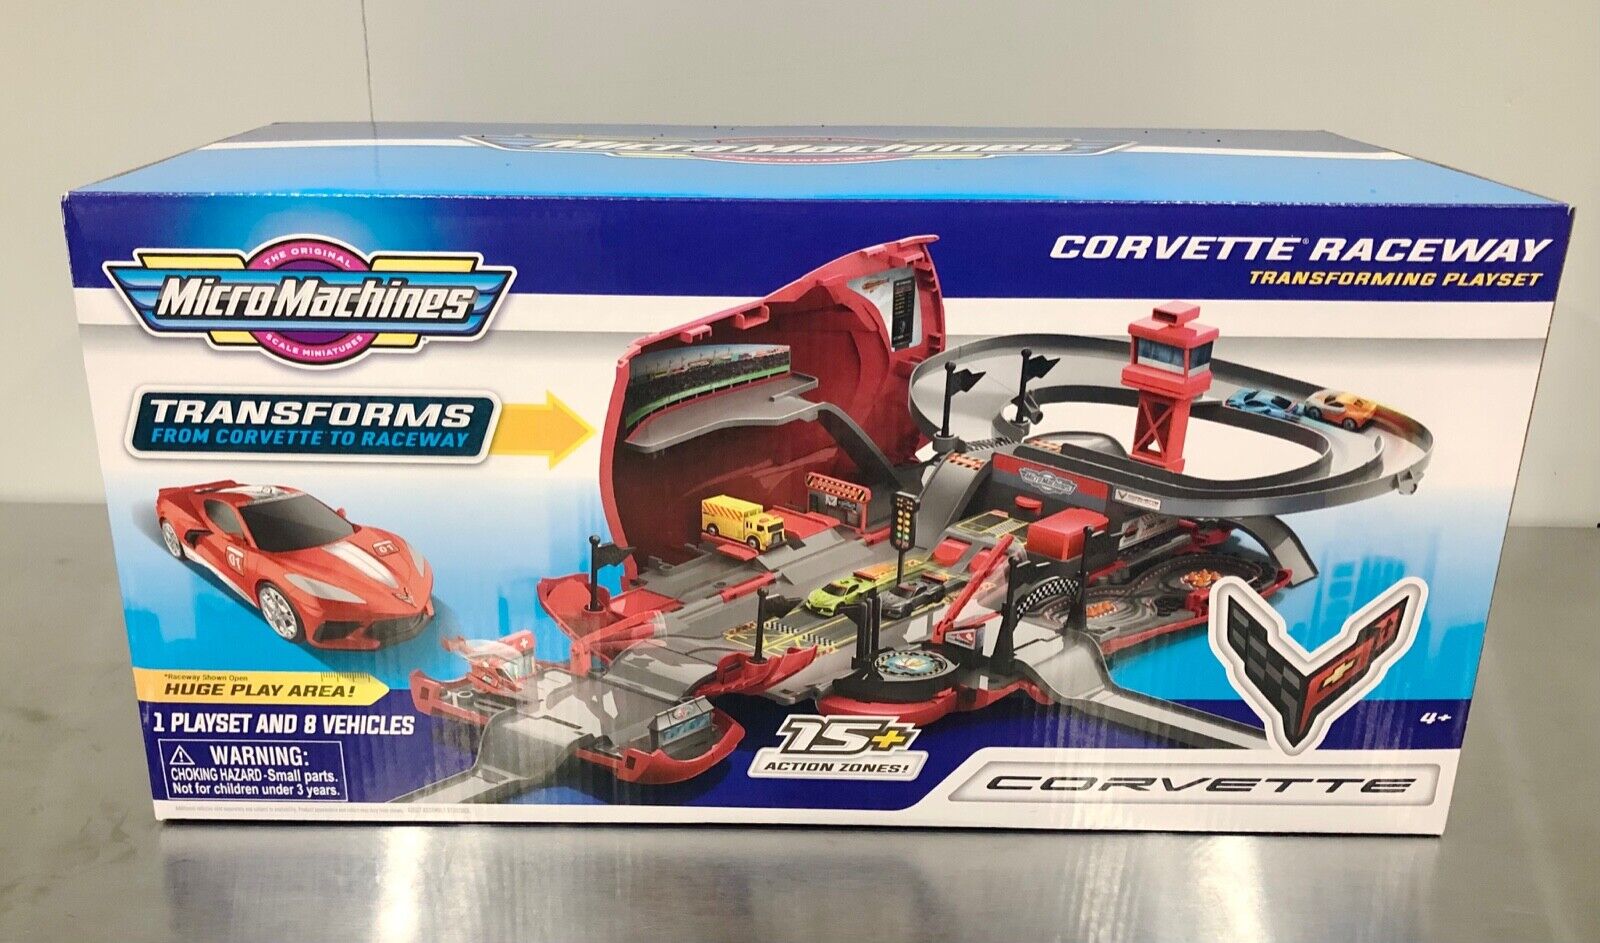 Micro Machines Corvette Raceway Transforming Corvette into Raceway Playset - ...